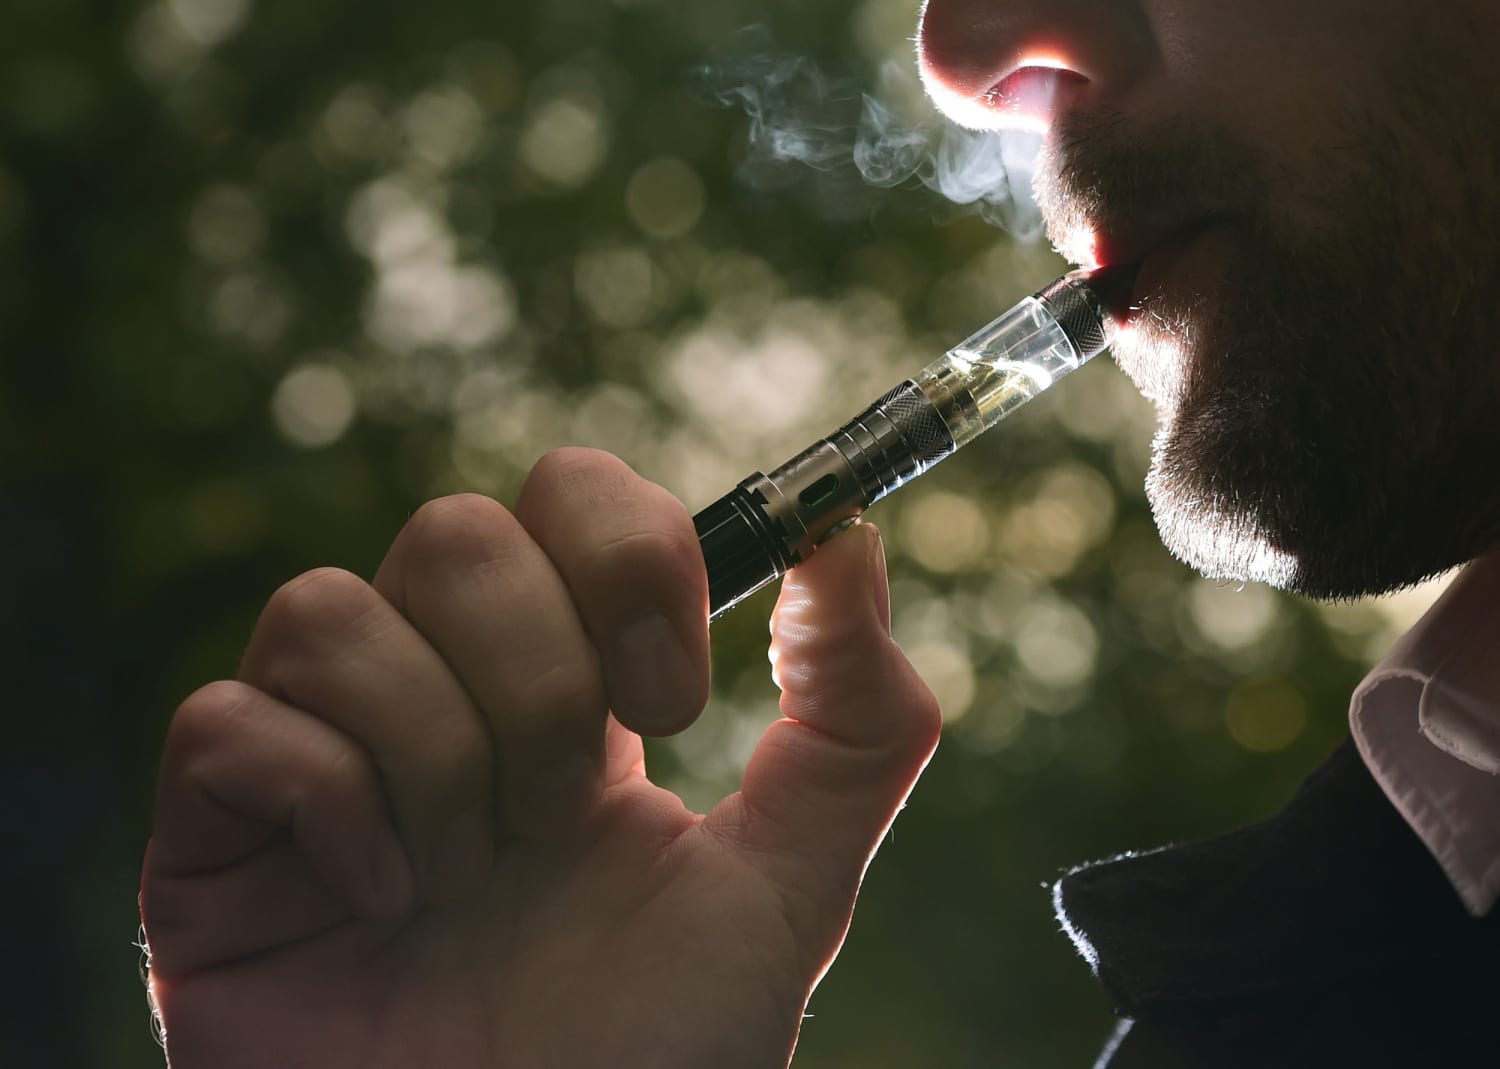 E-Cigarettes: The Health Risks of Vaping